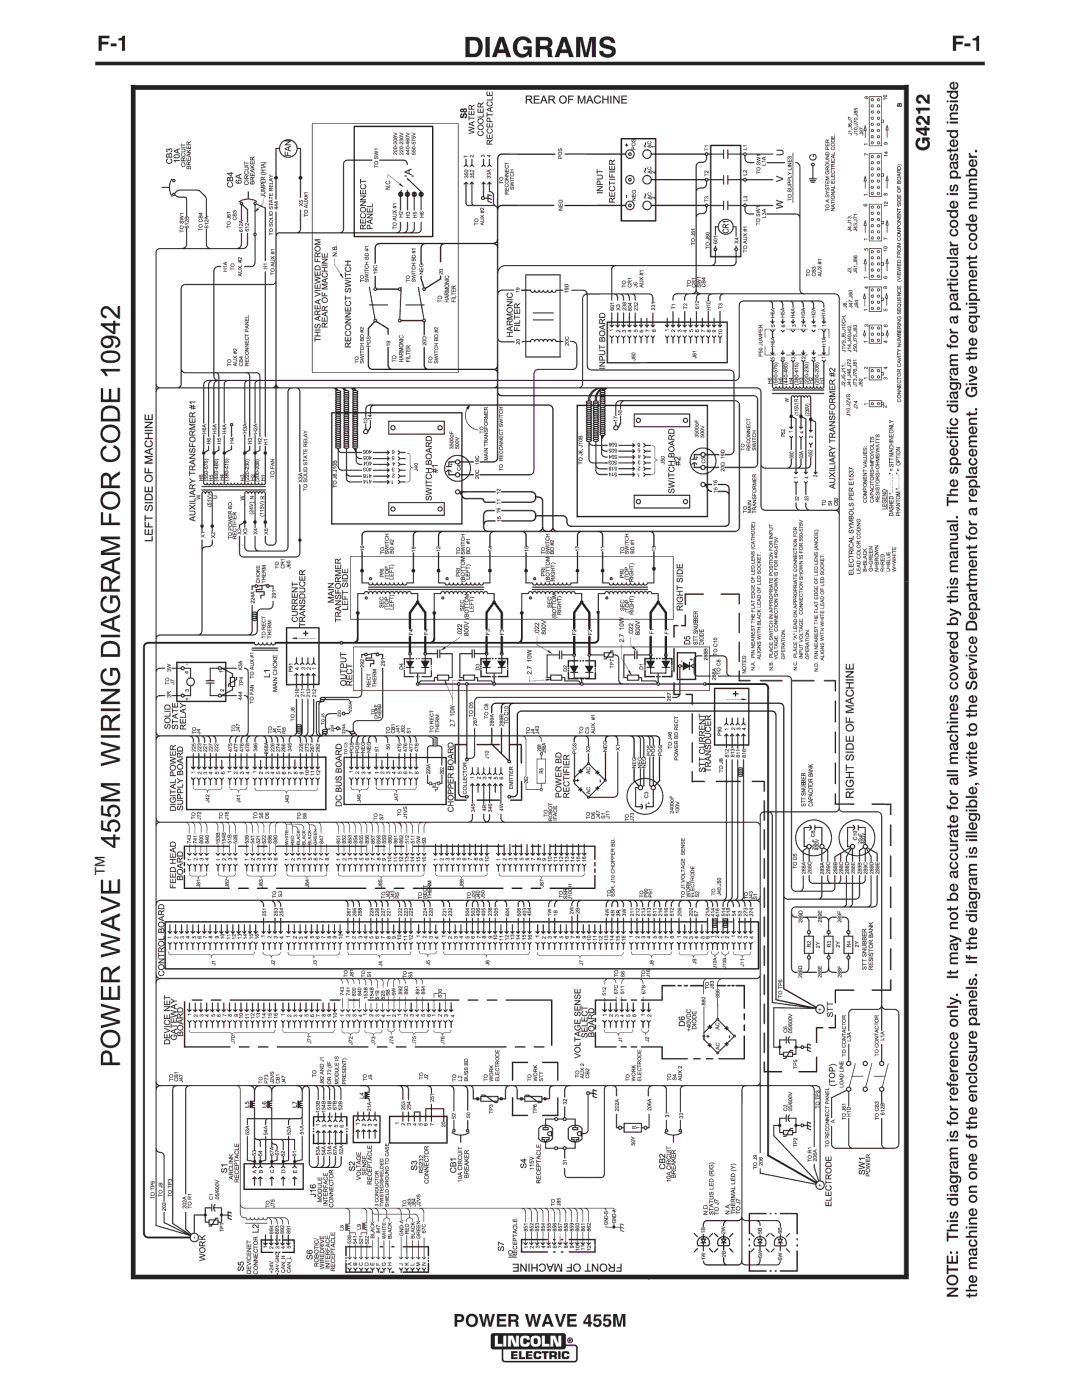 Lincoln Electric IM762-C manual Diagrams 